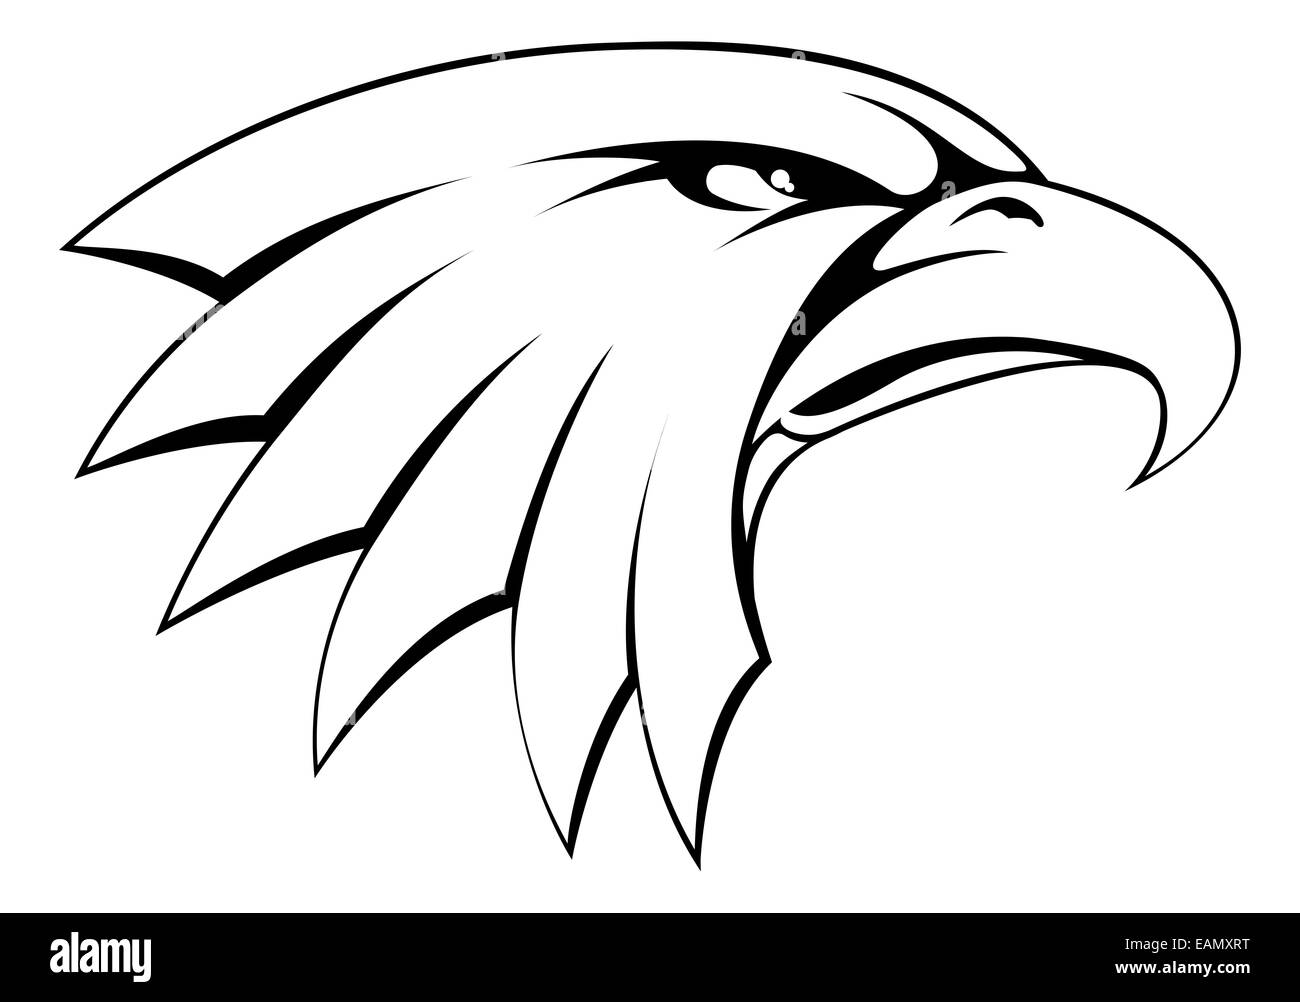 Orgulloso de ser un poderoso icono busca el águila calva cabeza Fotografía  de stock - Alamy